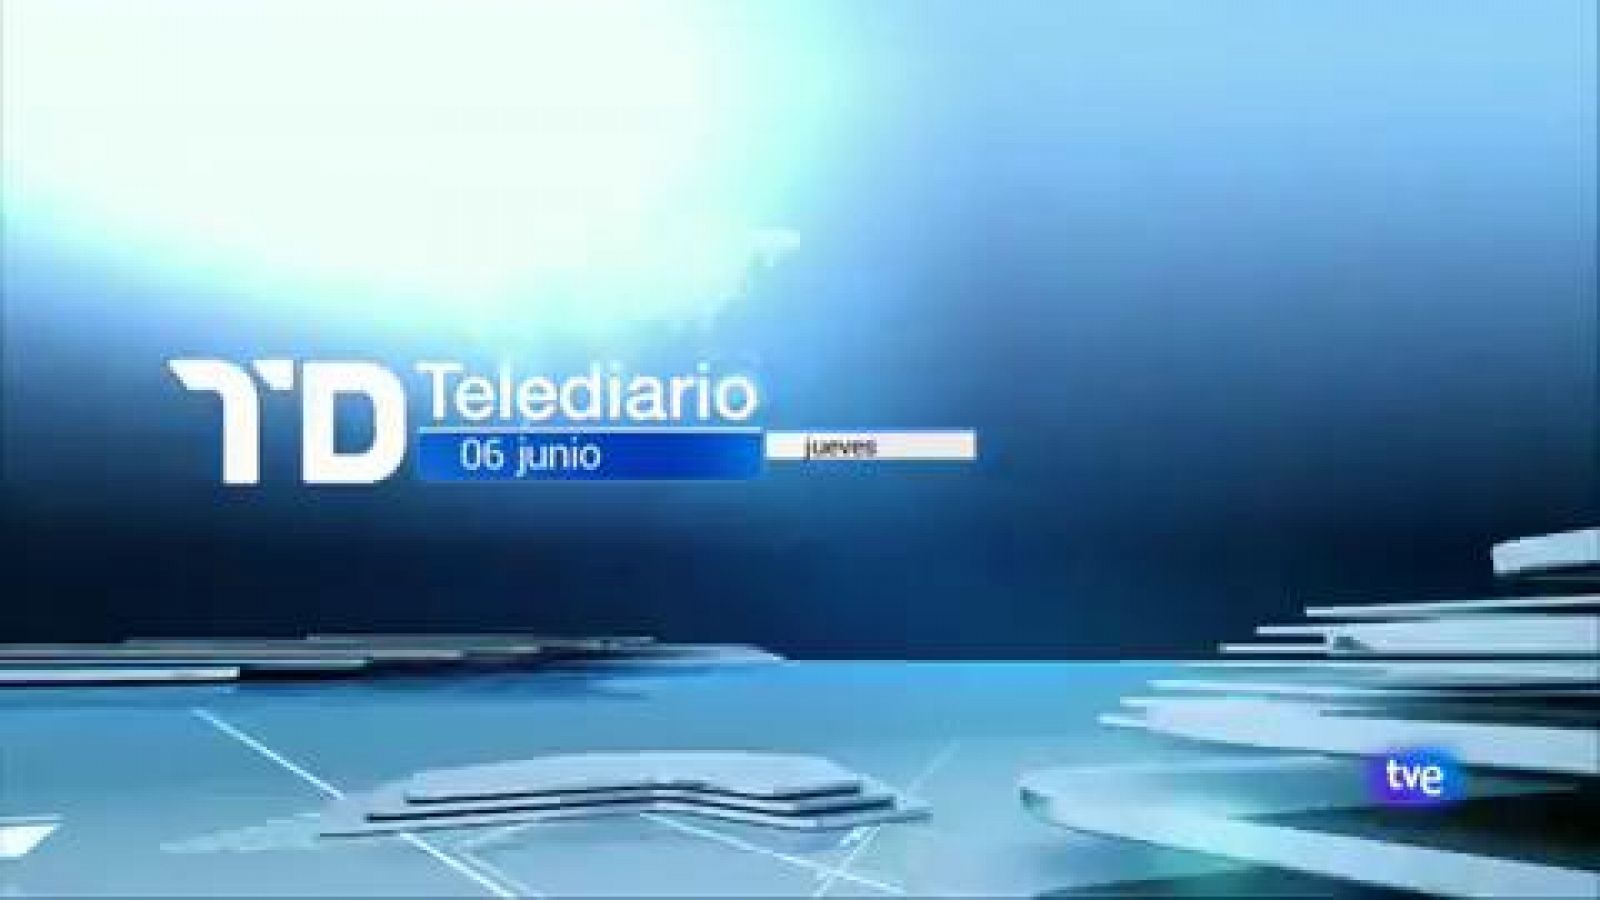 Telediario 1: Telediario 2 en 4' - 06/06/19 | RTVE Play